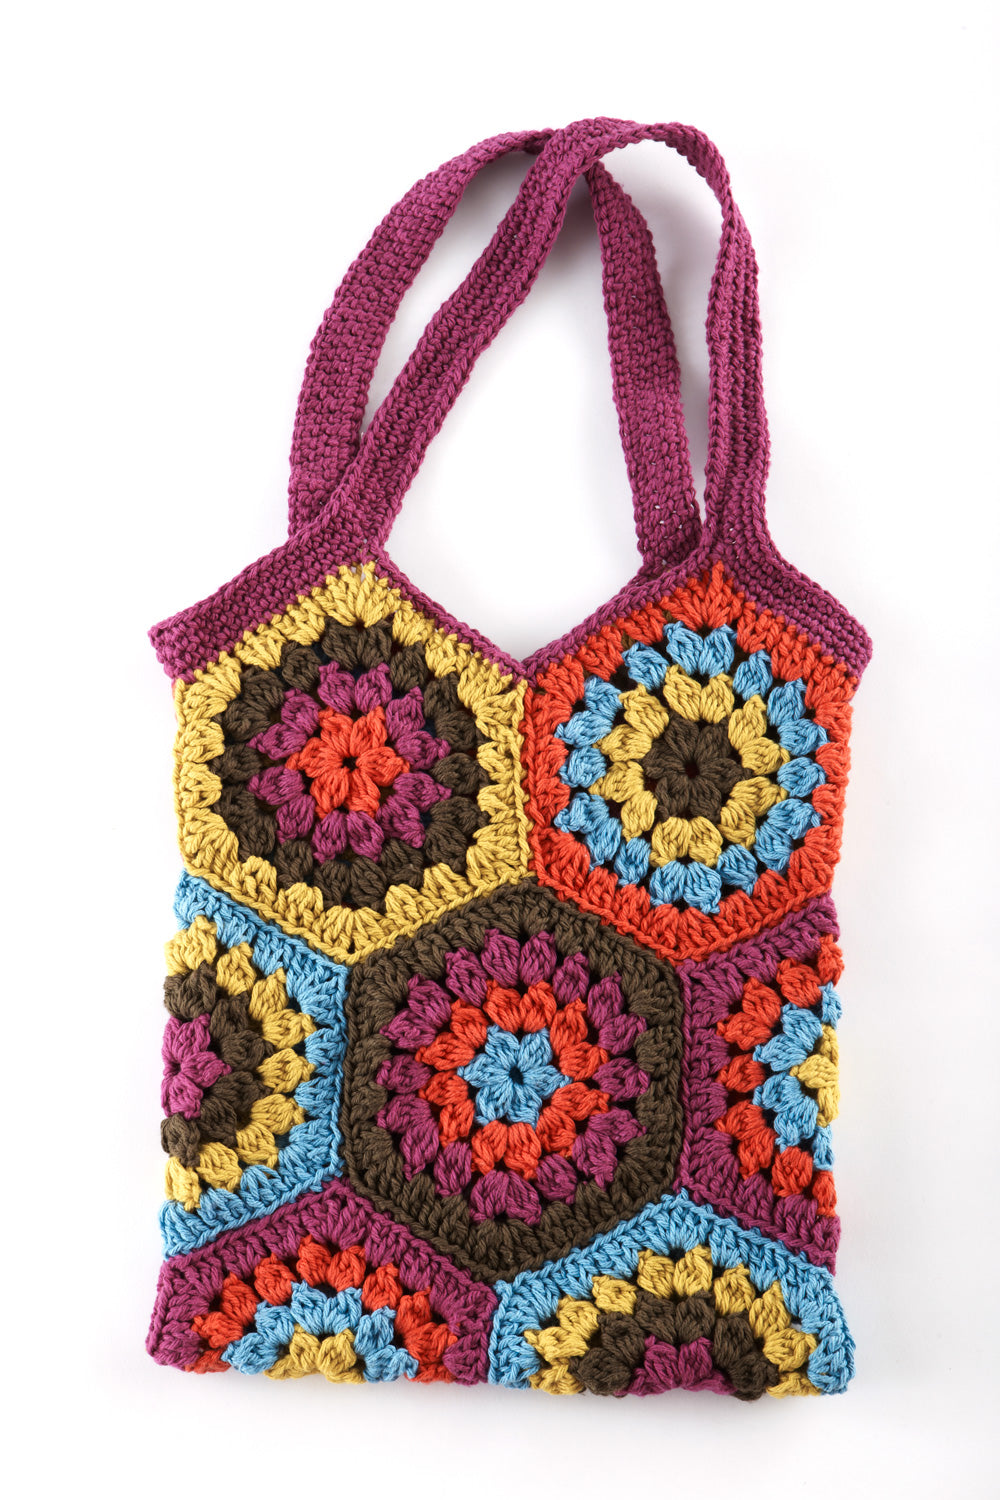 Crochet Pattern Hexagon Market Bag L20064